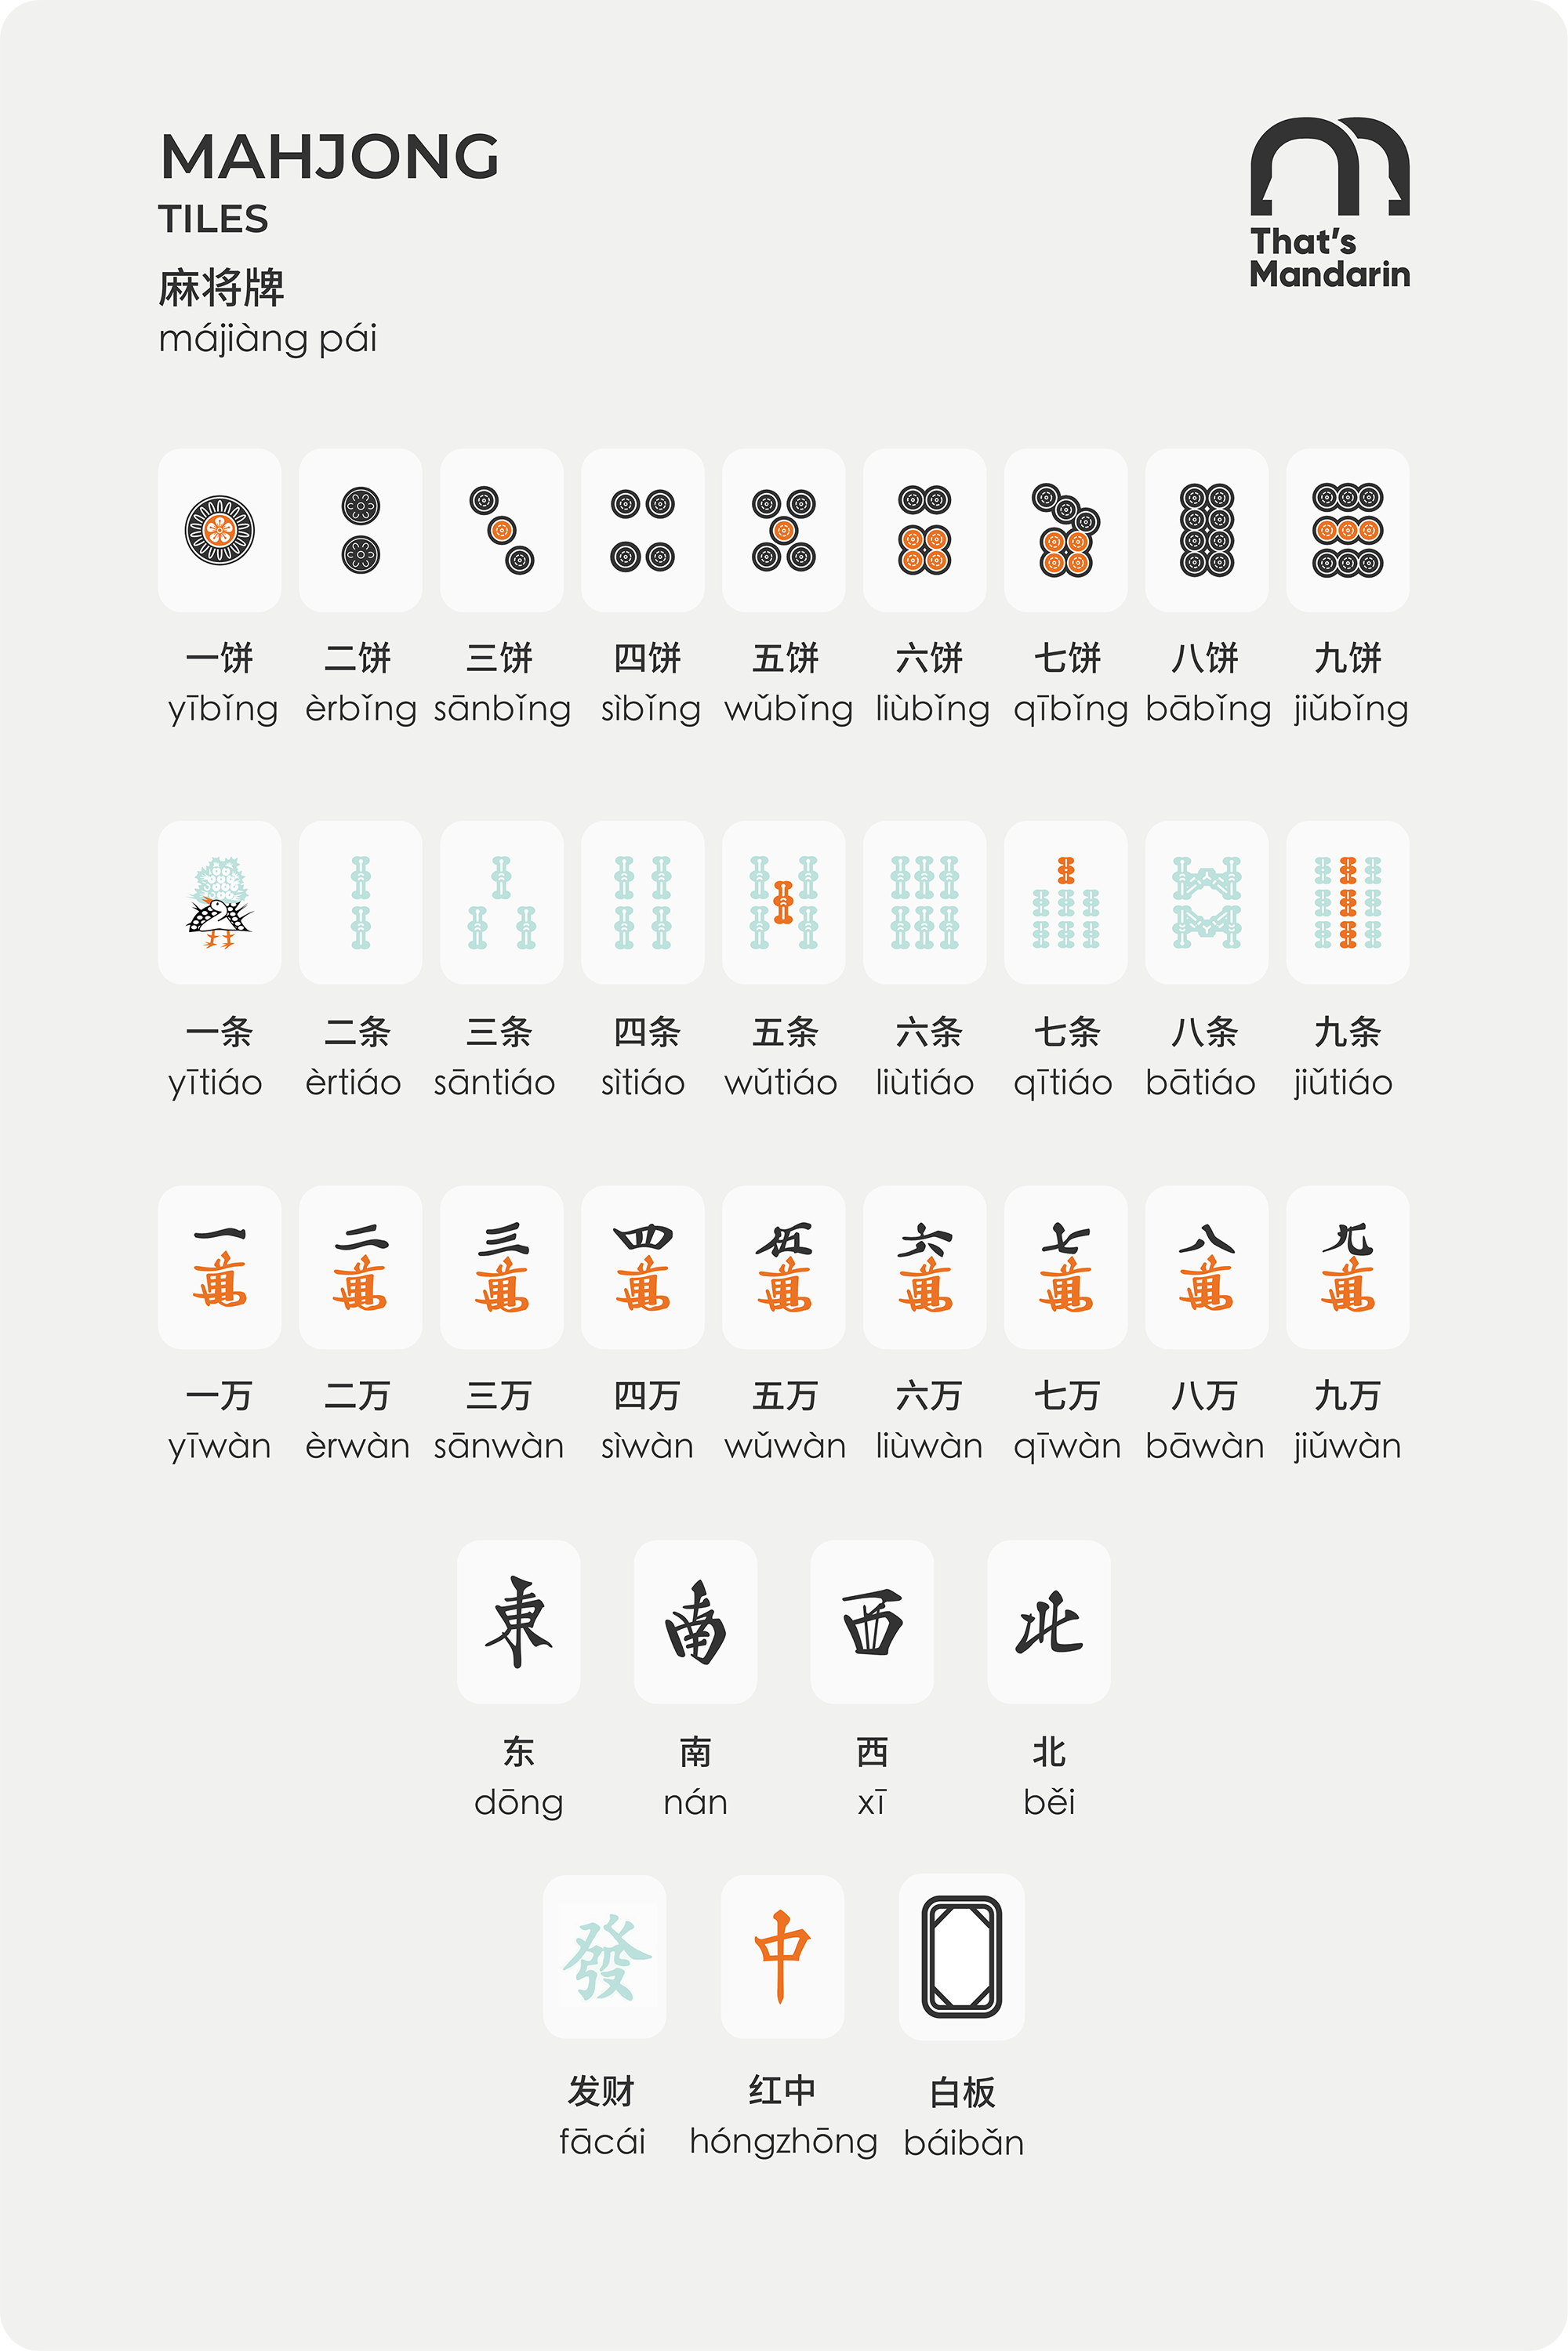 Mahjong Tiles | Infographics by That's Mandarin